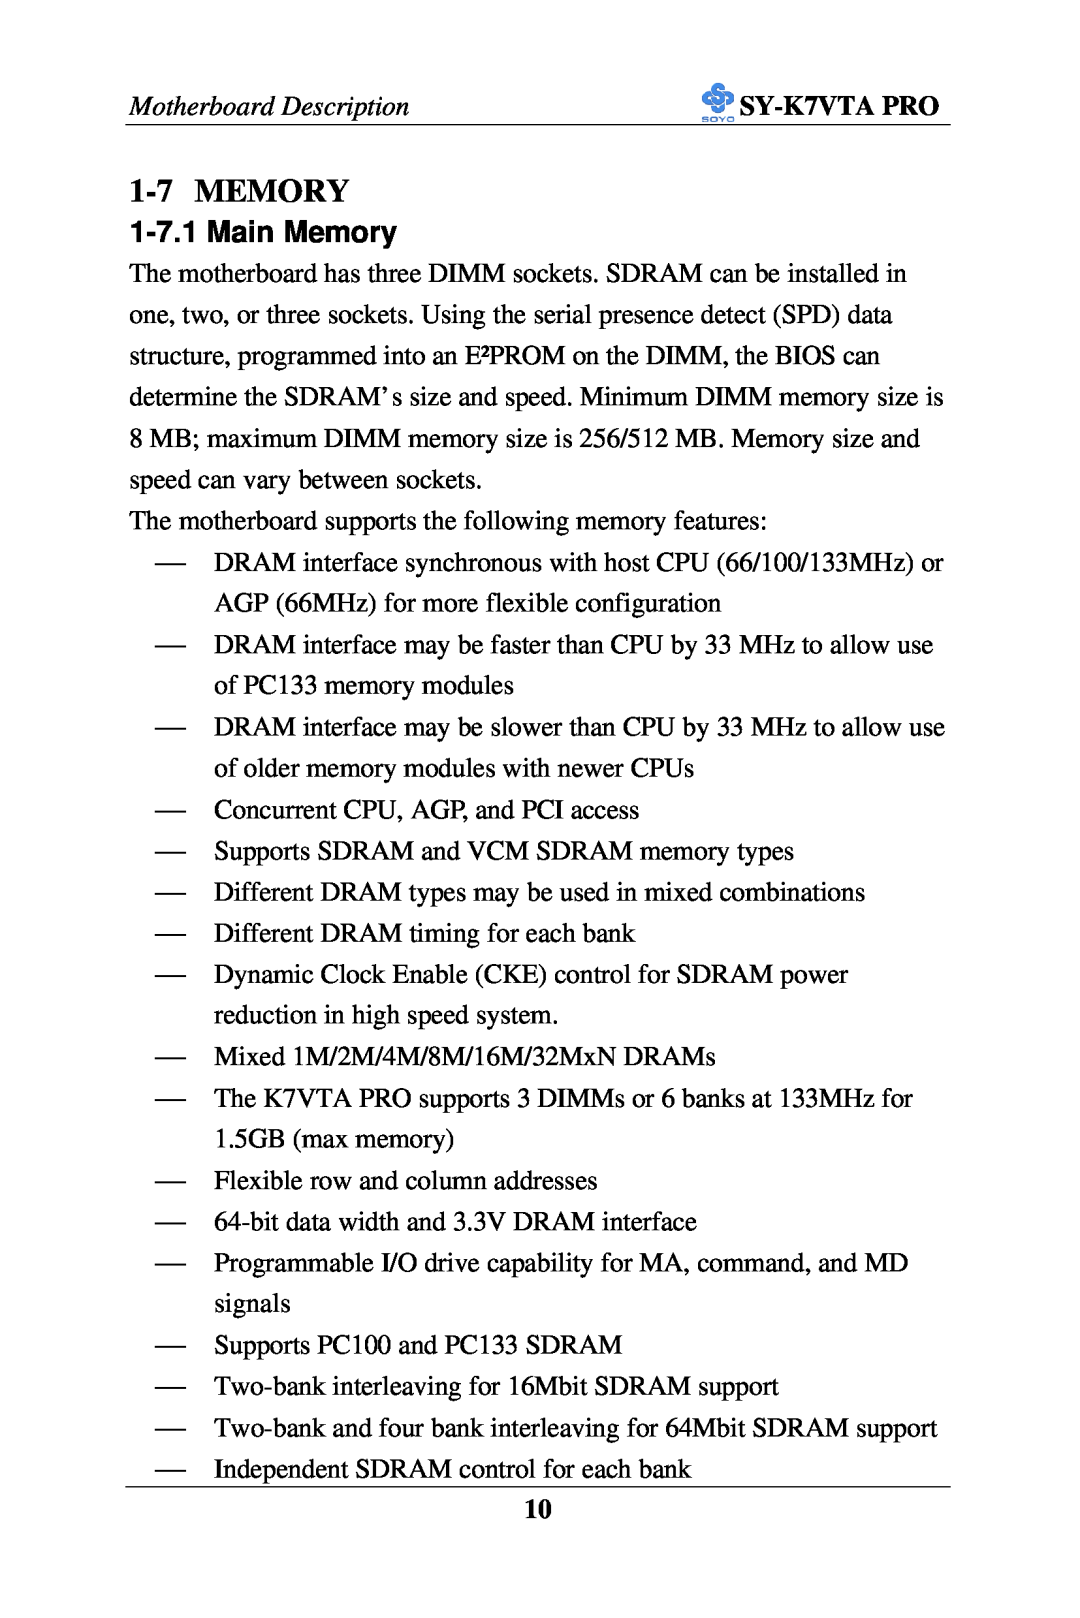 SOYO SY-K7VTA PRO user manual Main Memory, Motherboard Description 